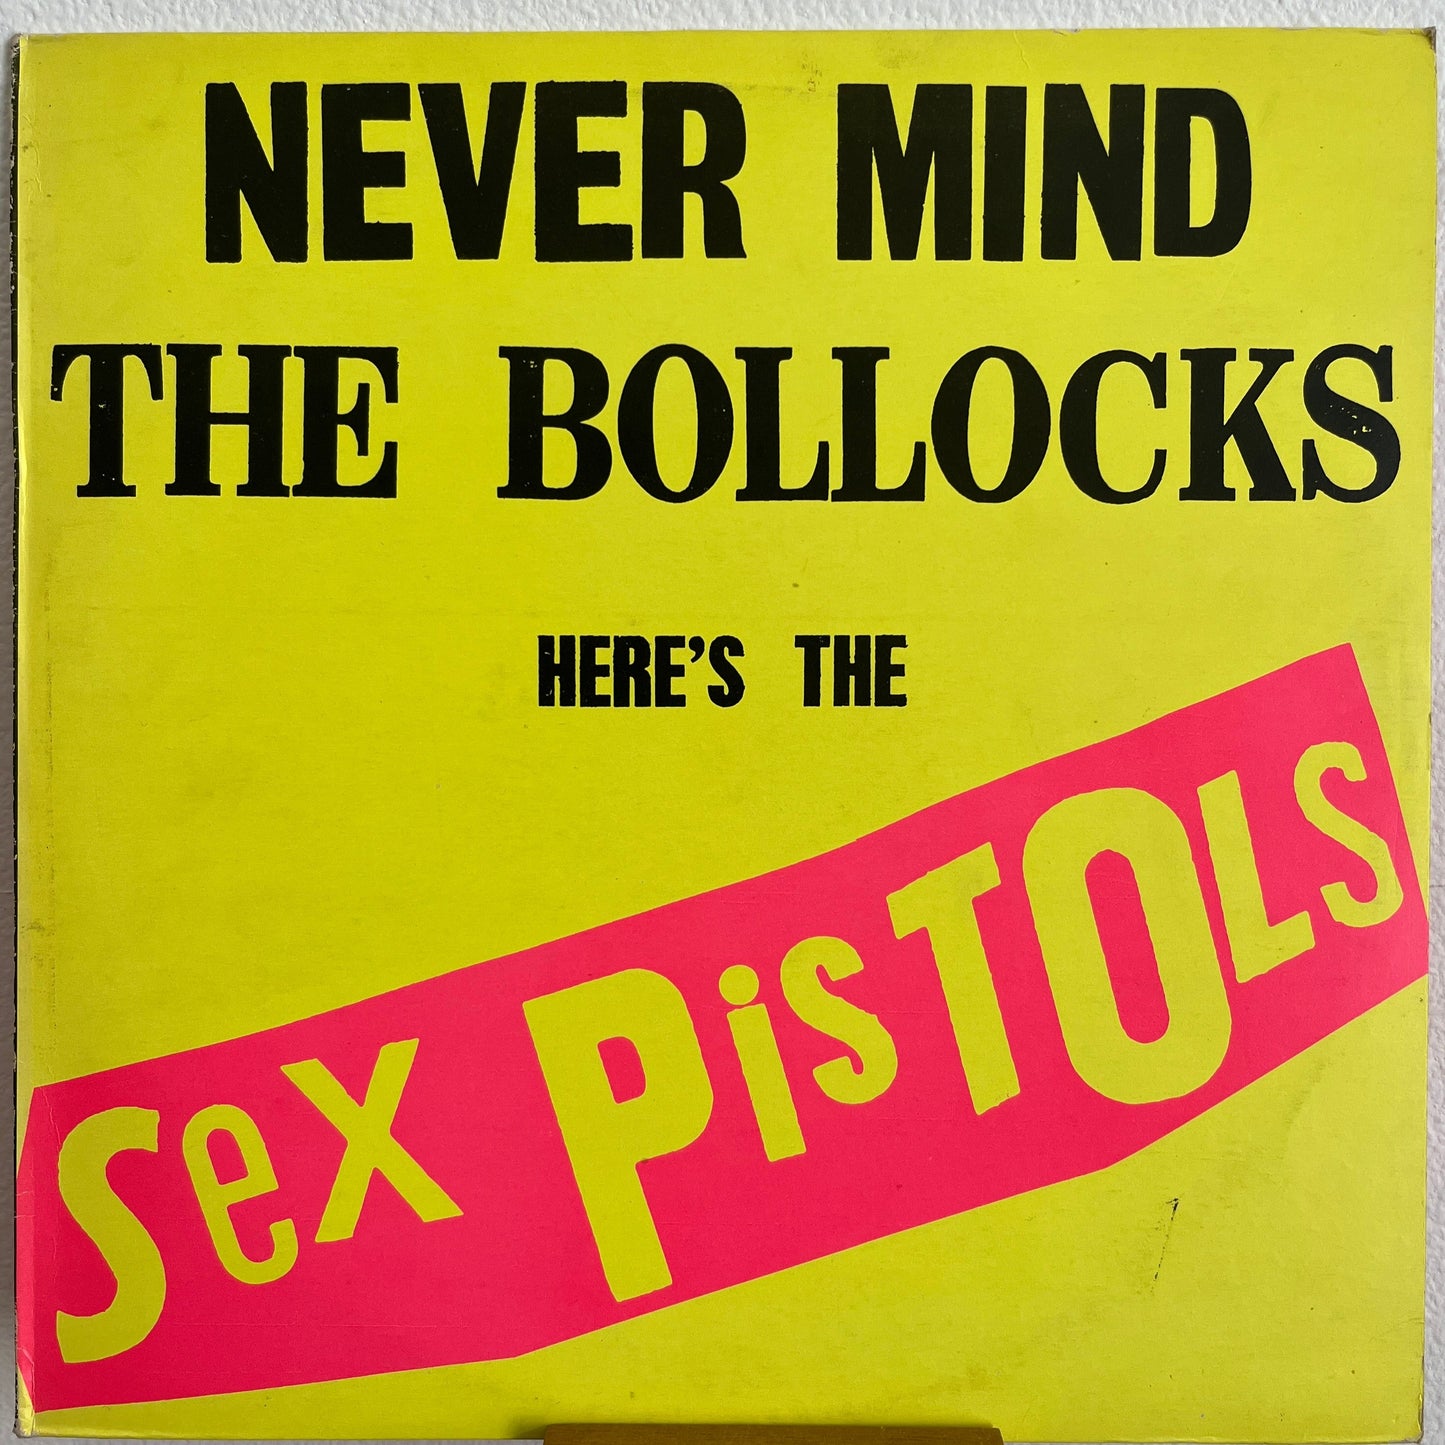 Sex Pistols - Never Mind The Bollocks (UK 1st Press LP)